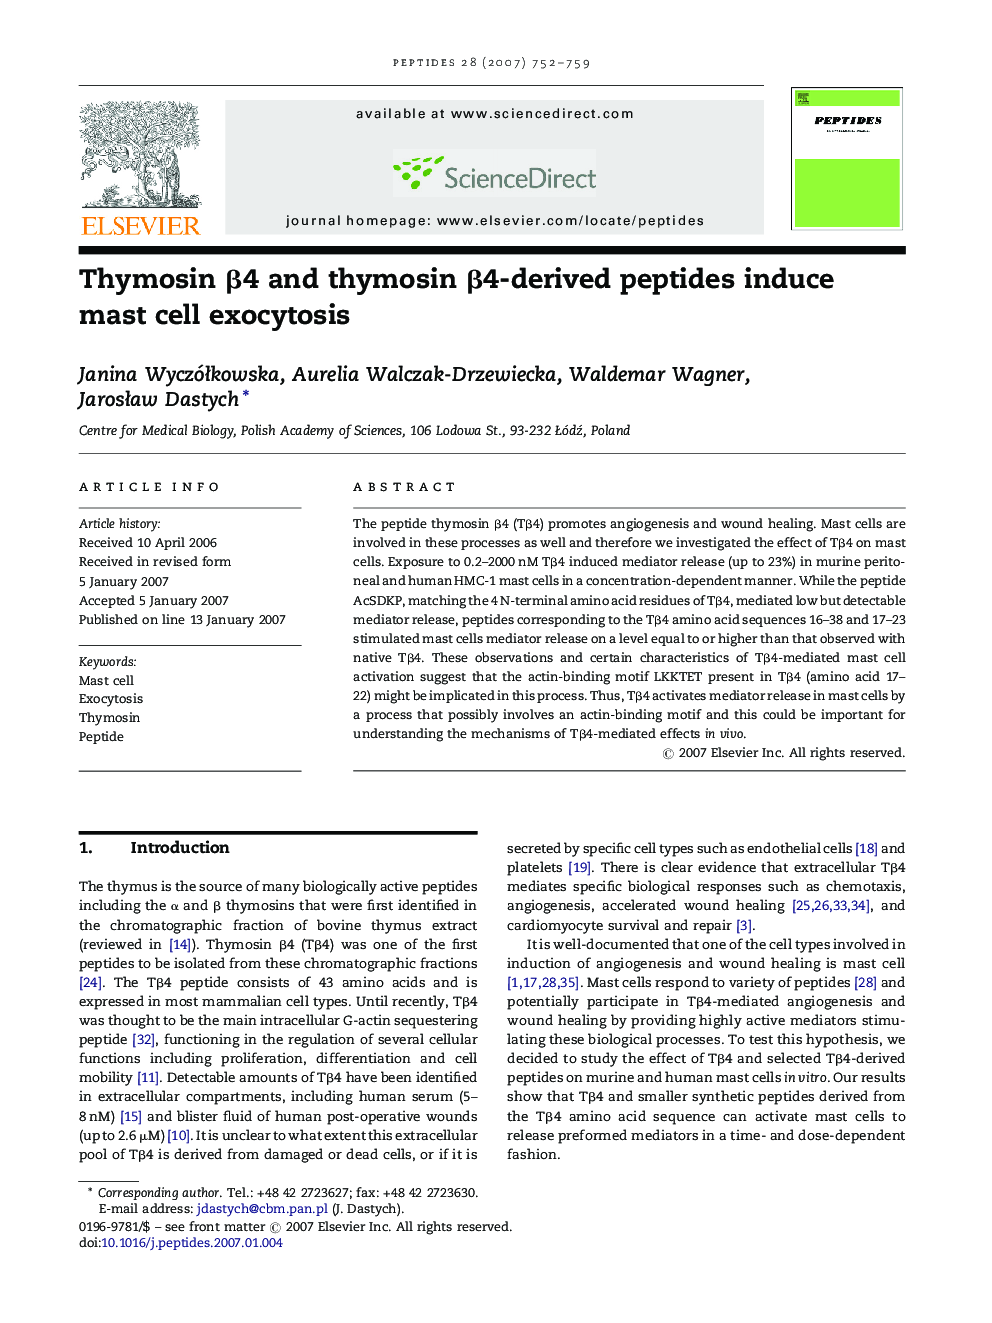 Thymosin Î²4 and thymosin Î²4-derived peptides induce mast cell exocytosis